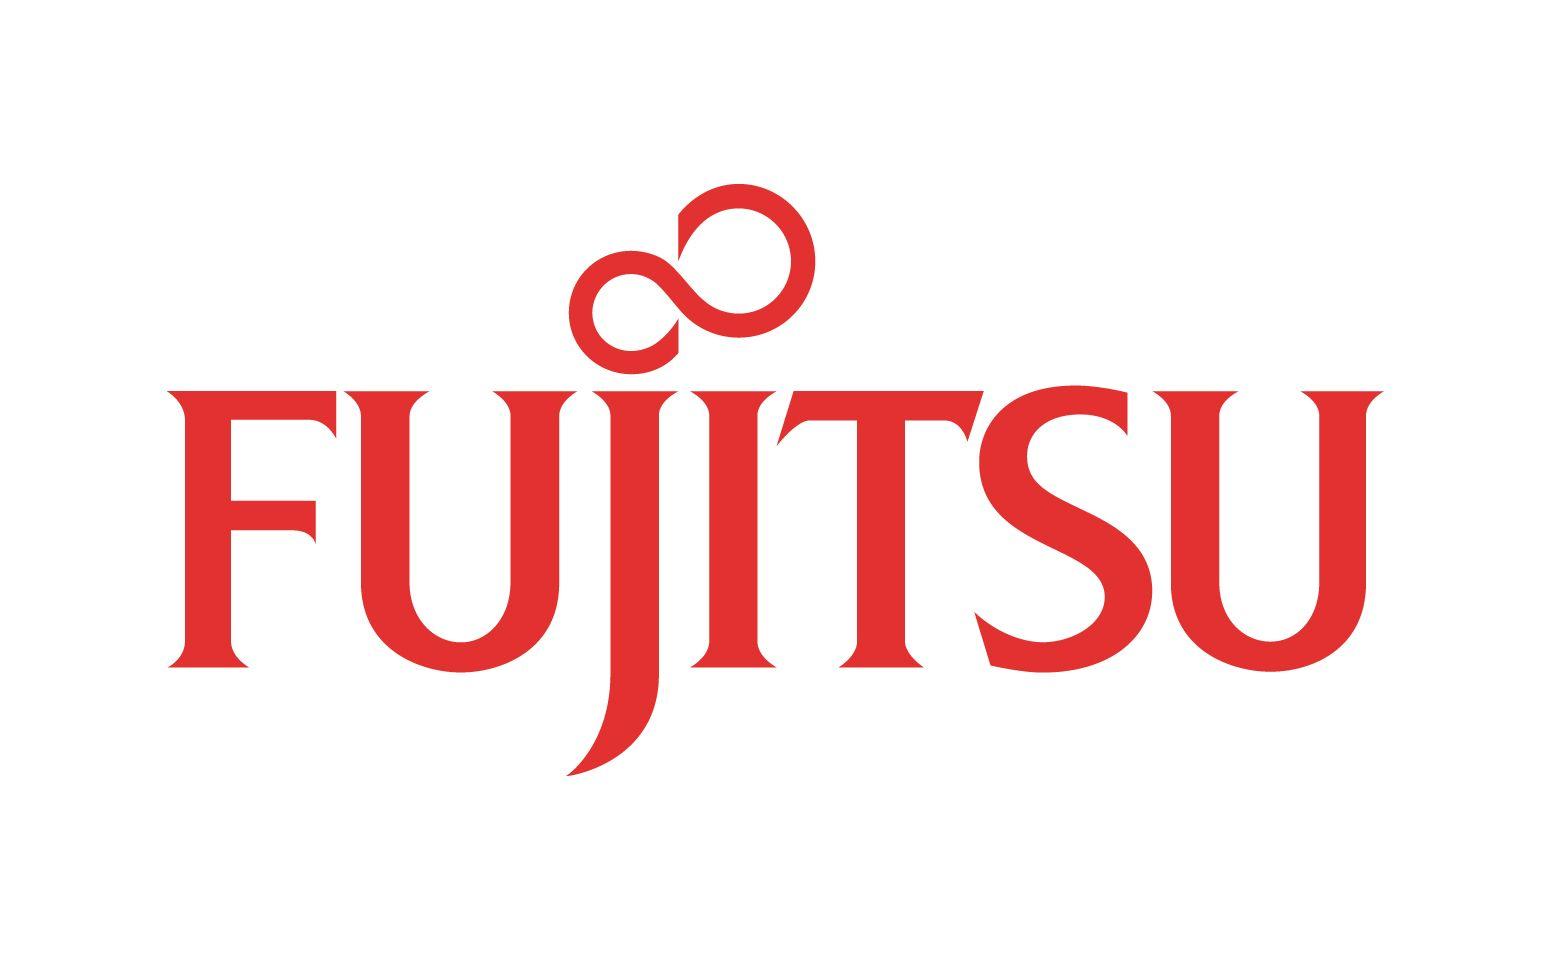 Lustre Logo - OpenSFS: The Lustre File System Community